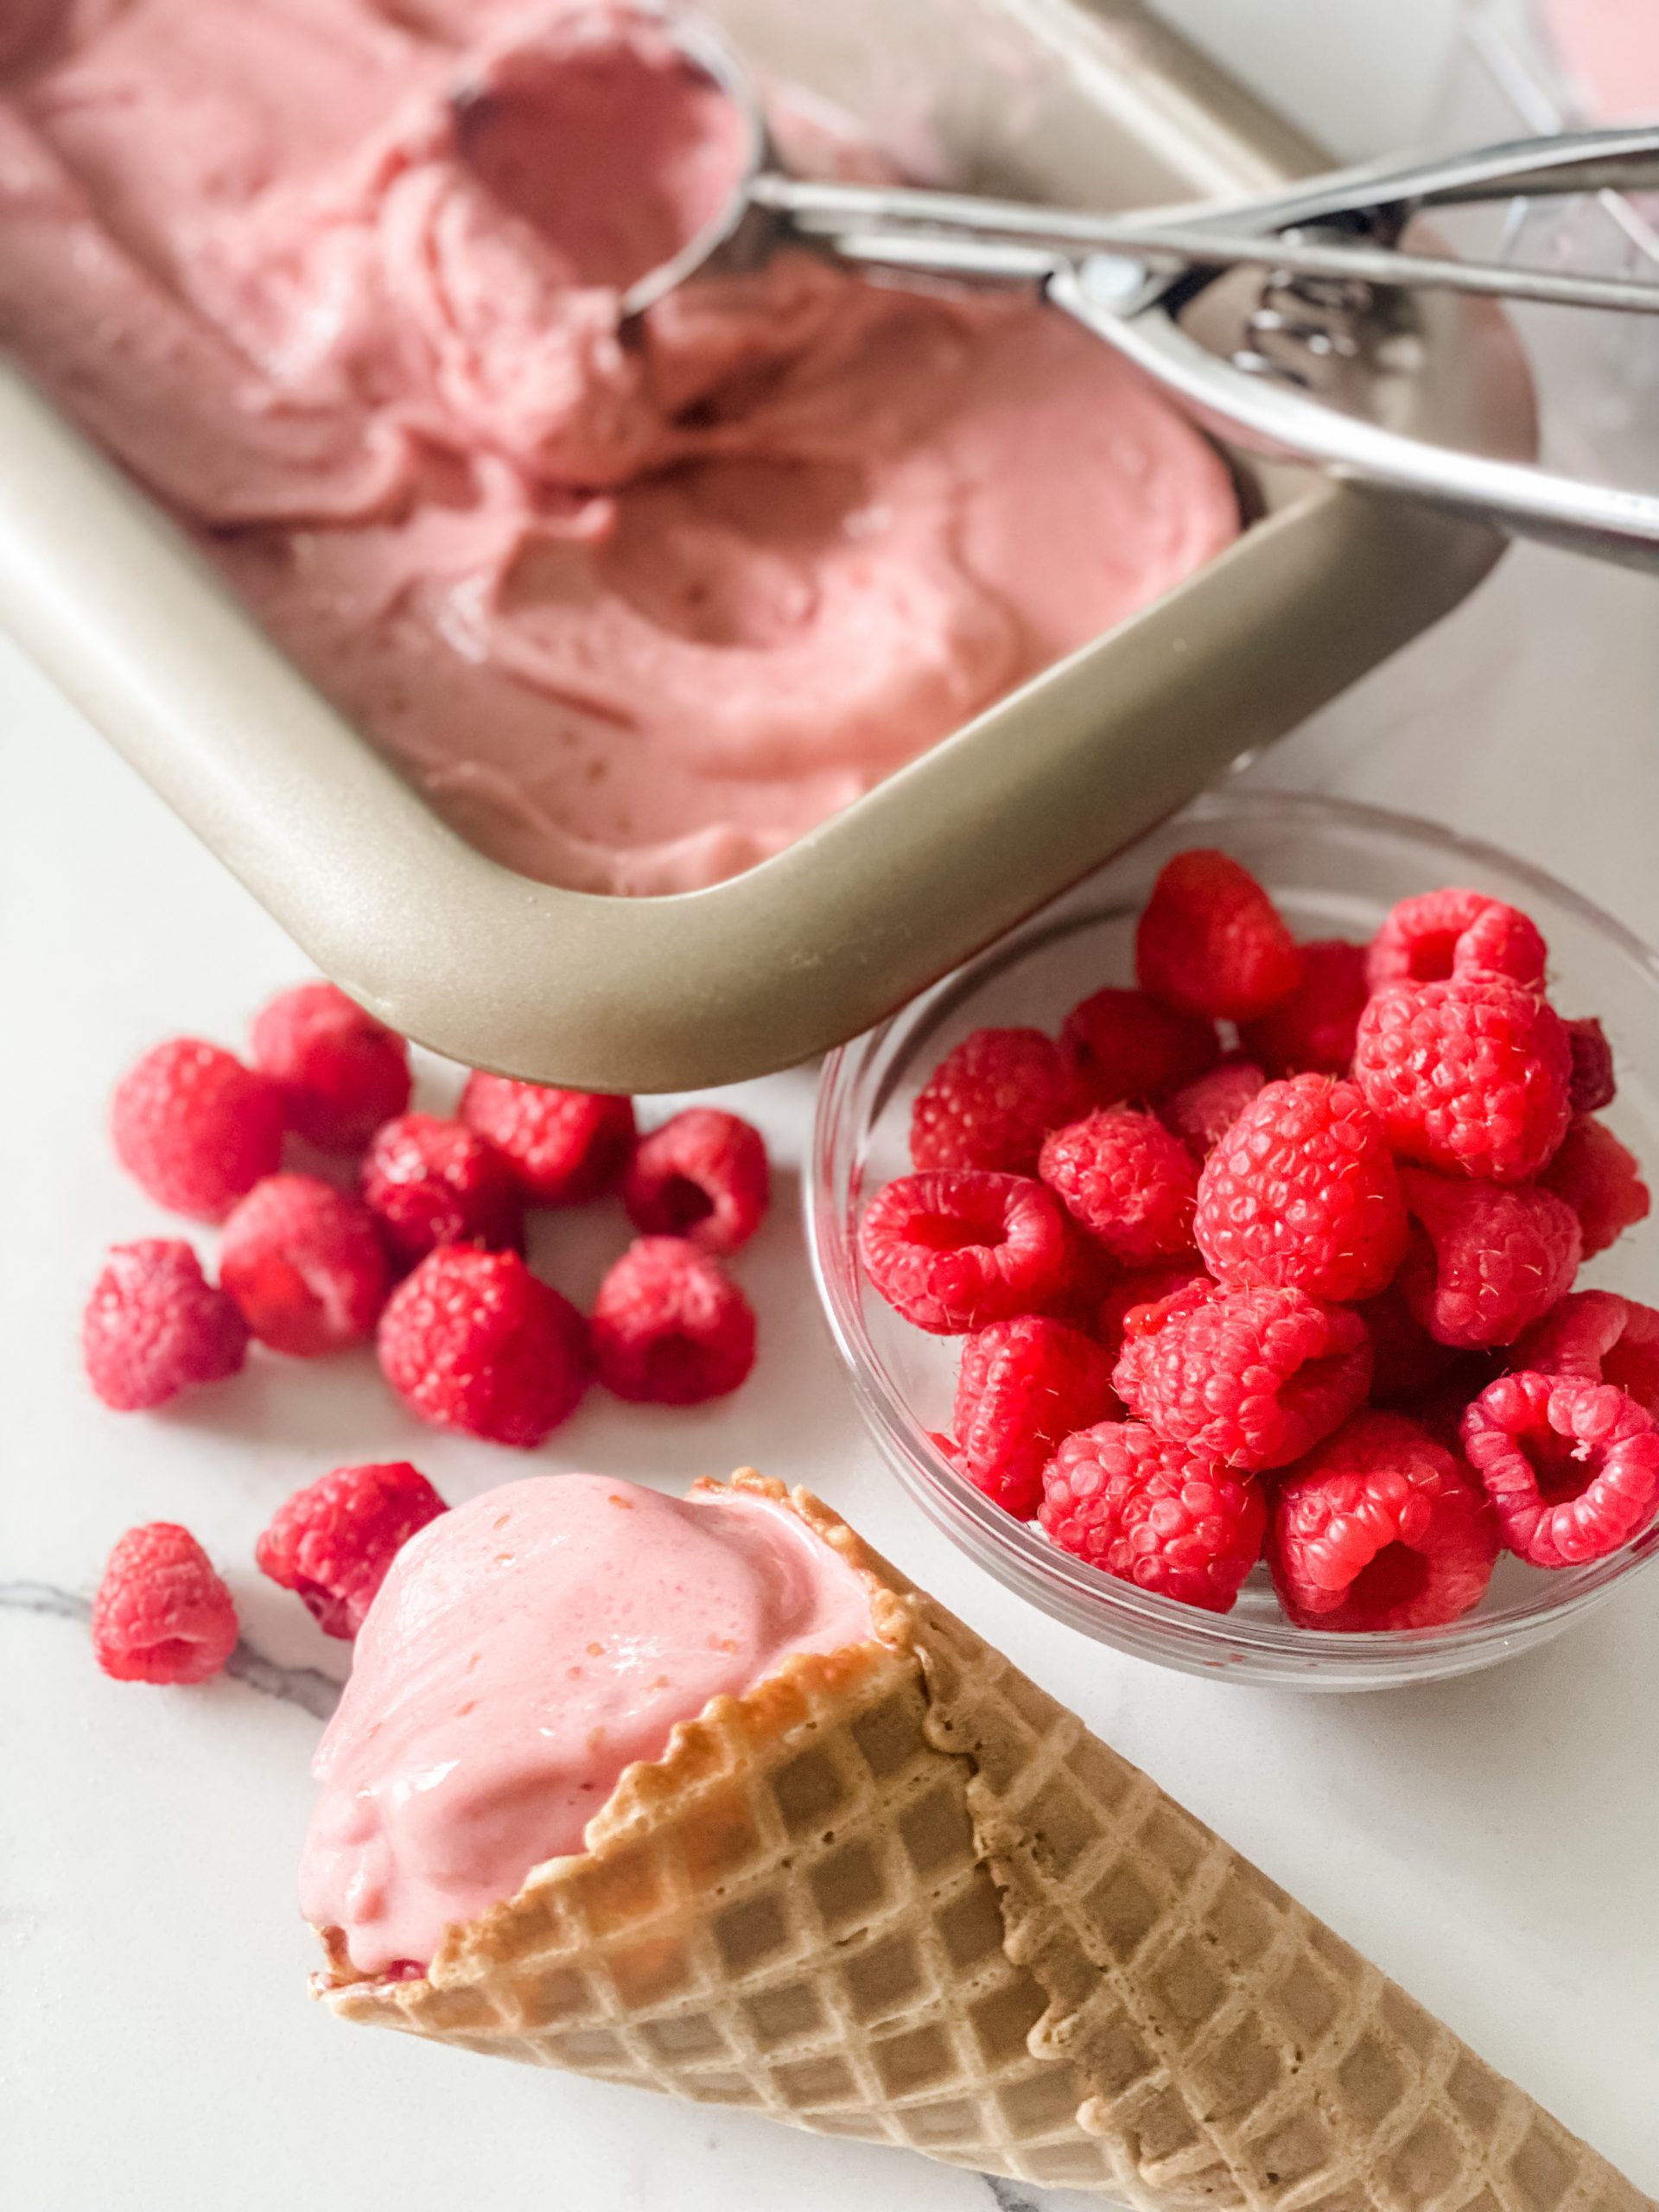 Hot Sale 5 Flavors Yogurt Icecream Mixer Maker Price Dippin Dots